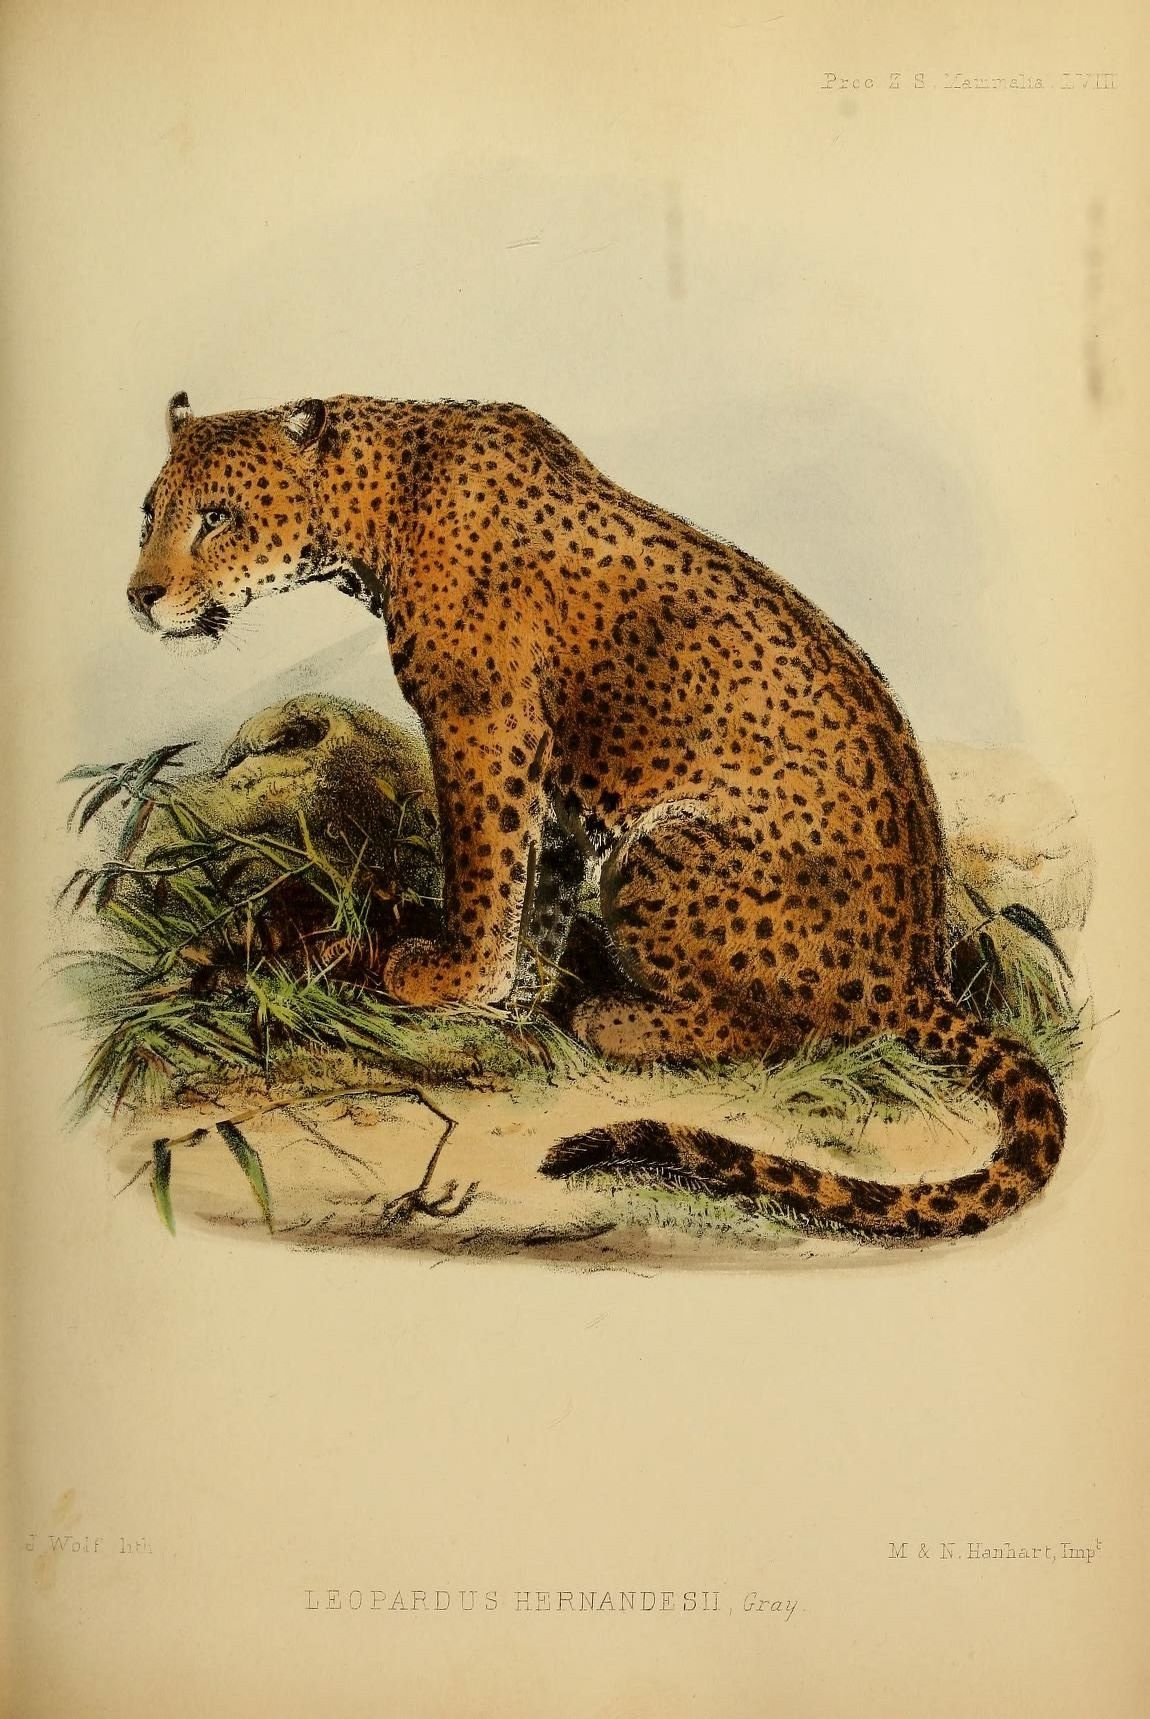 North American jaguar - Wikipedia